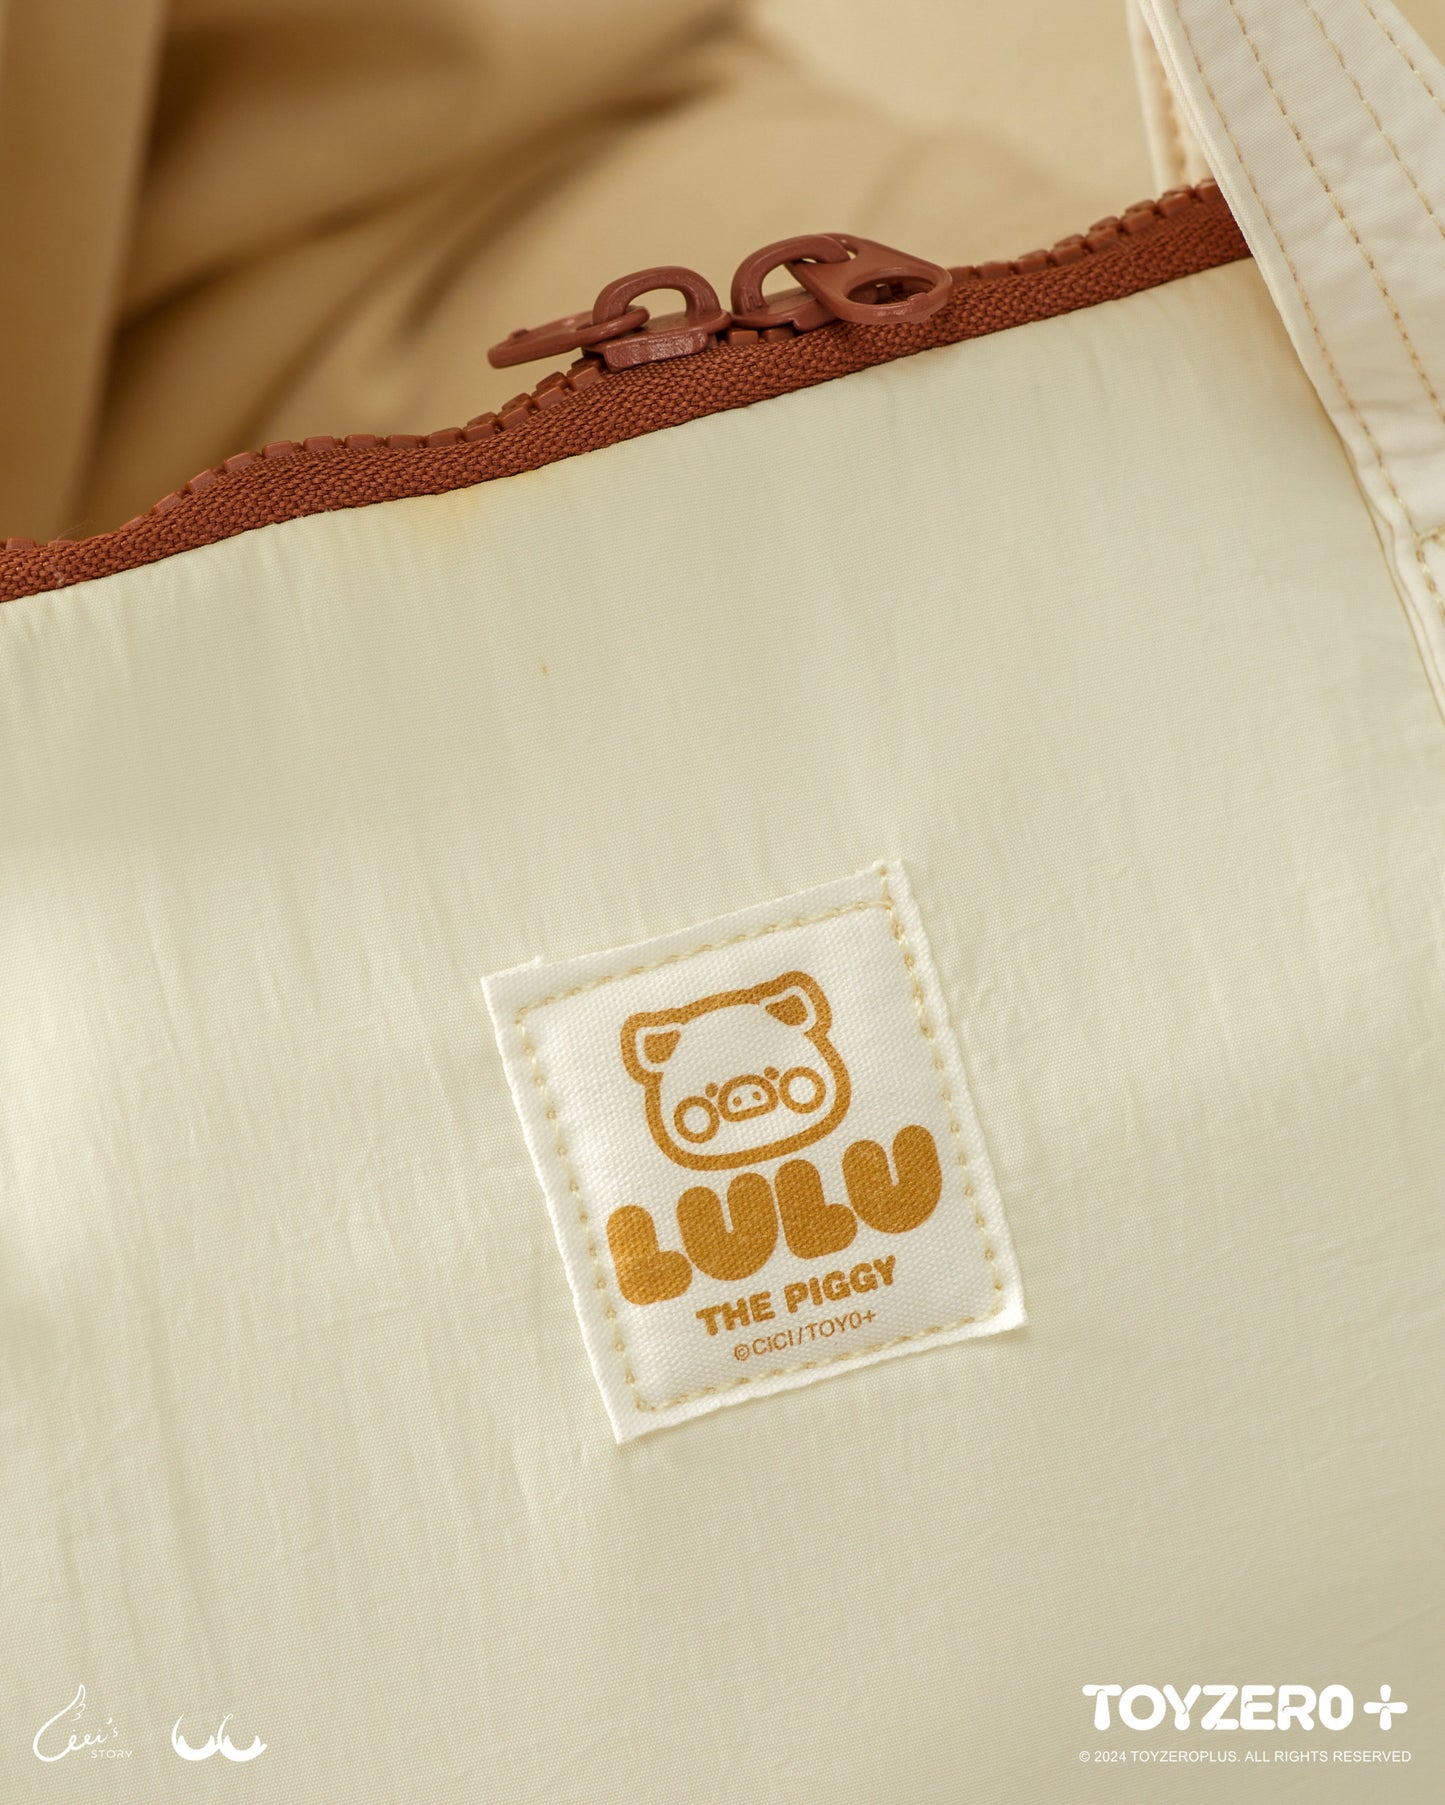 LuLu the Piggy Costume Series -  Bear & Sheep Laptop Case 罐頭豬LuLu 變裝系列 - 電腦保護套 (豬熊 & 豬羊)